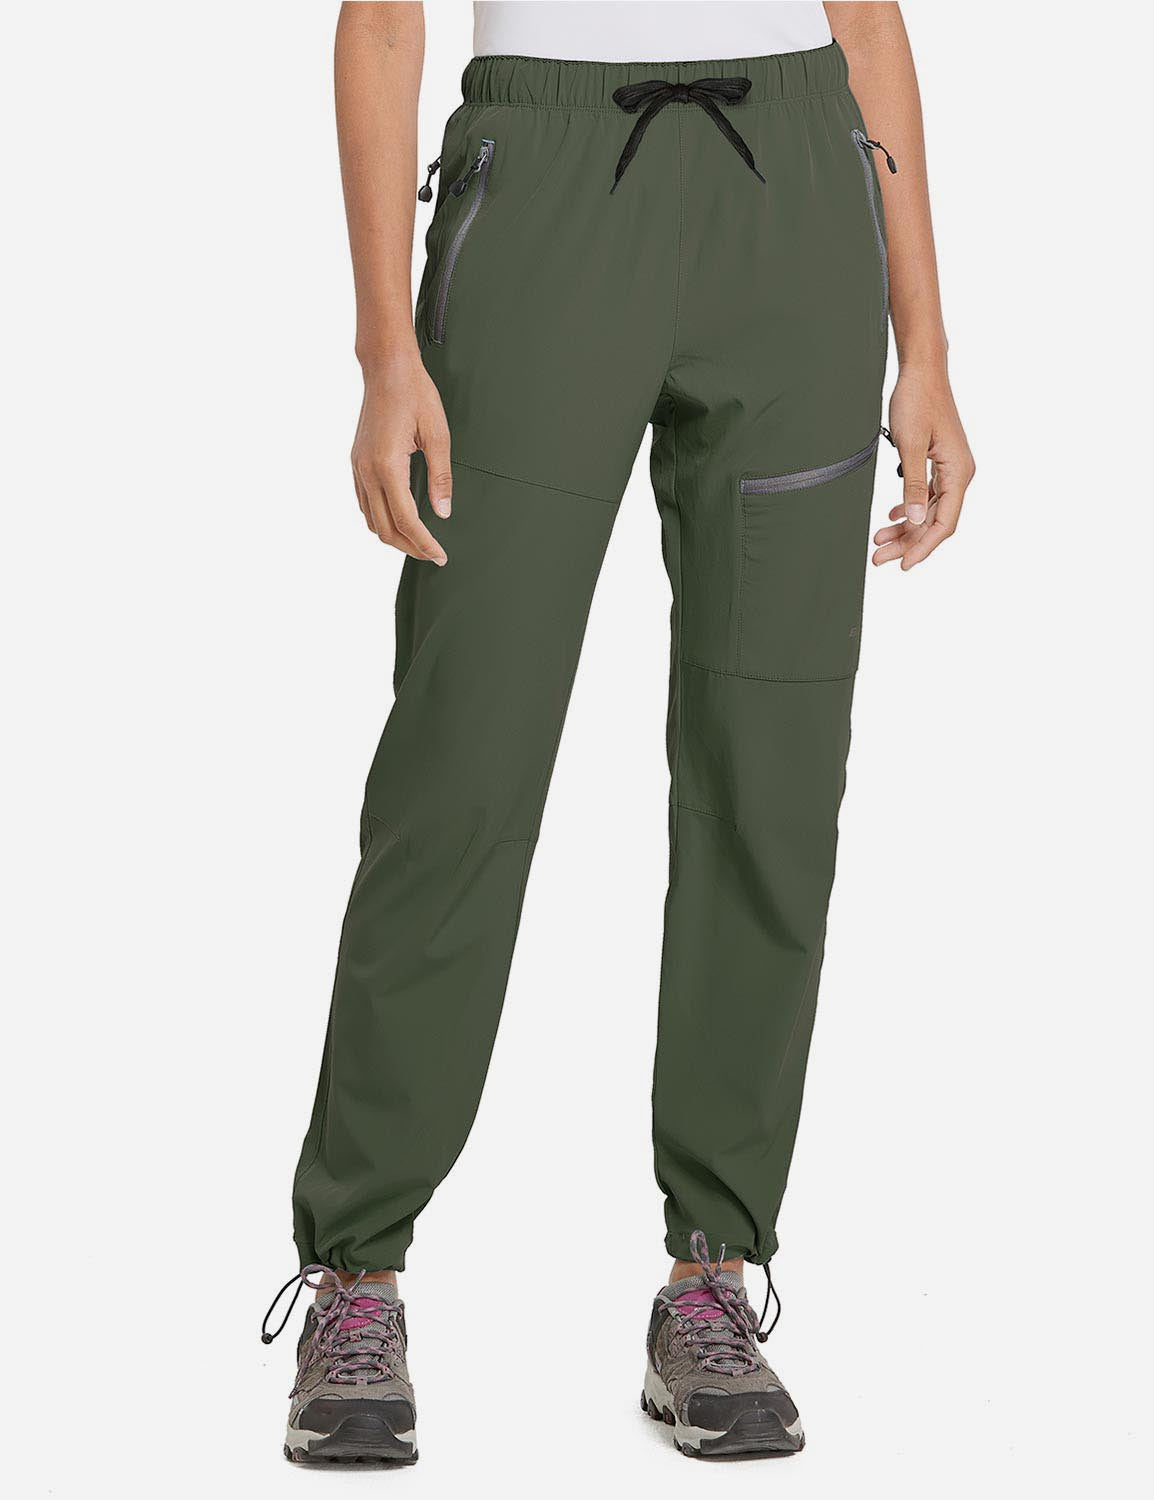 BALEAF Men's Sweatpants Hiking Pants Cargo Joggers for Workout Sun